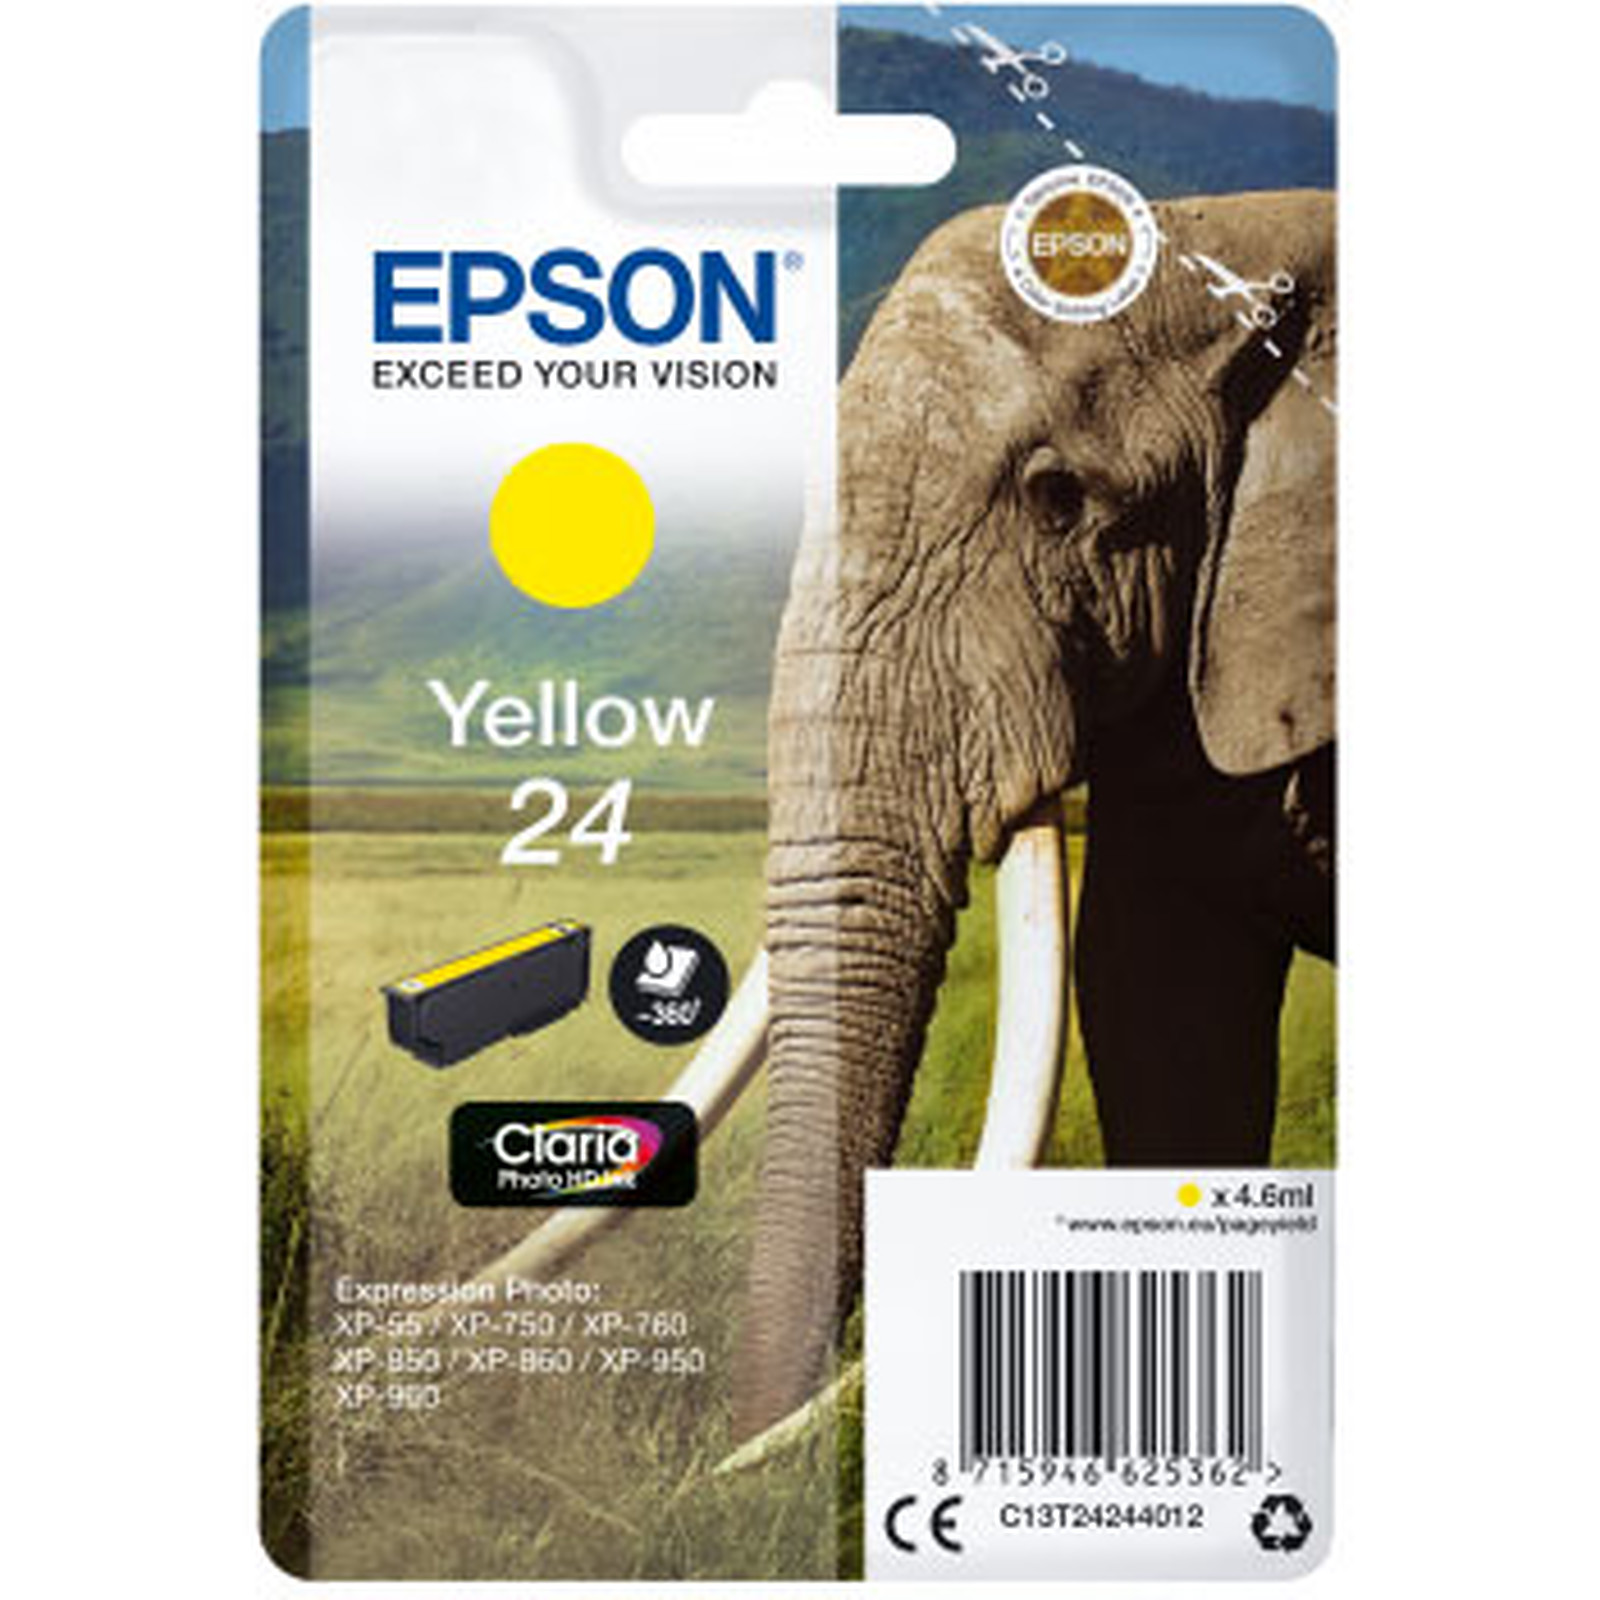 Epson Elephant 24 Jaune - Cartouche imprimante Epson